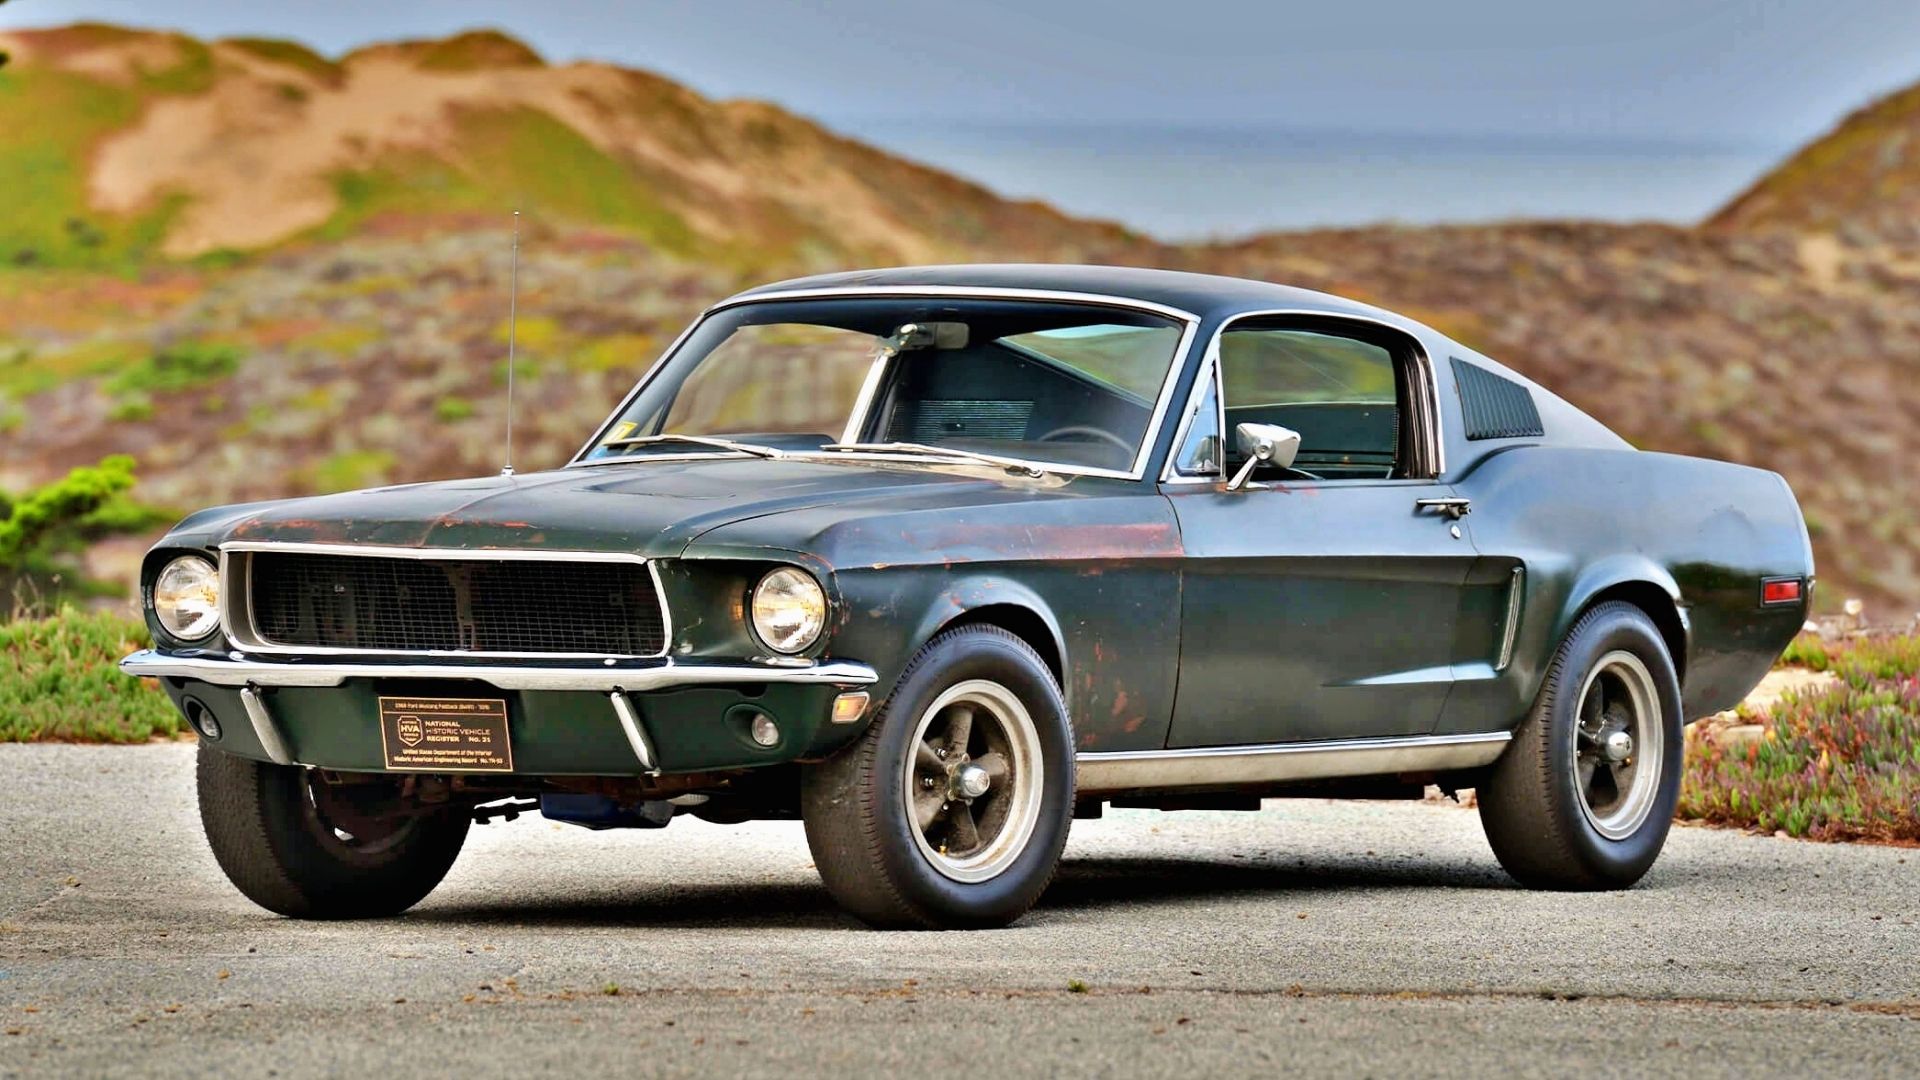 Green 1968 Ford Mustang GT 'Bullitt'